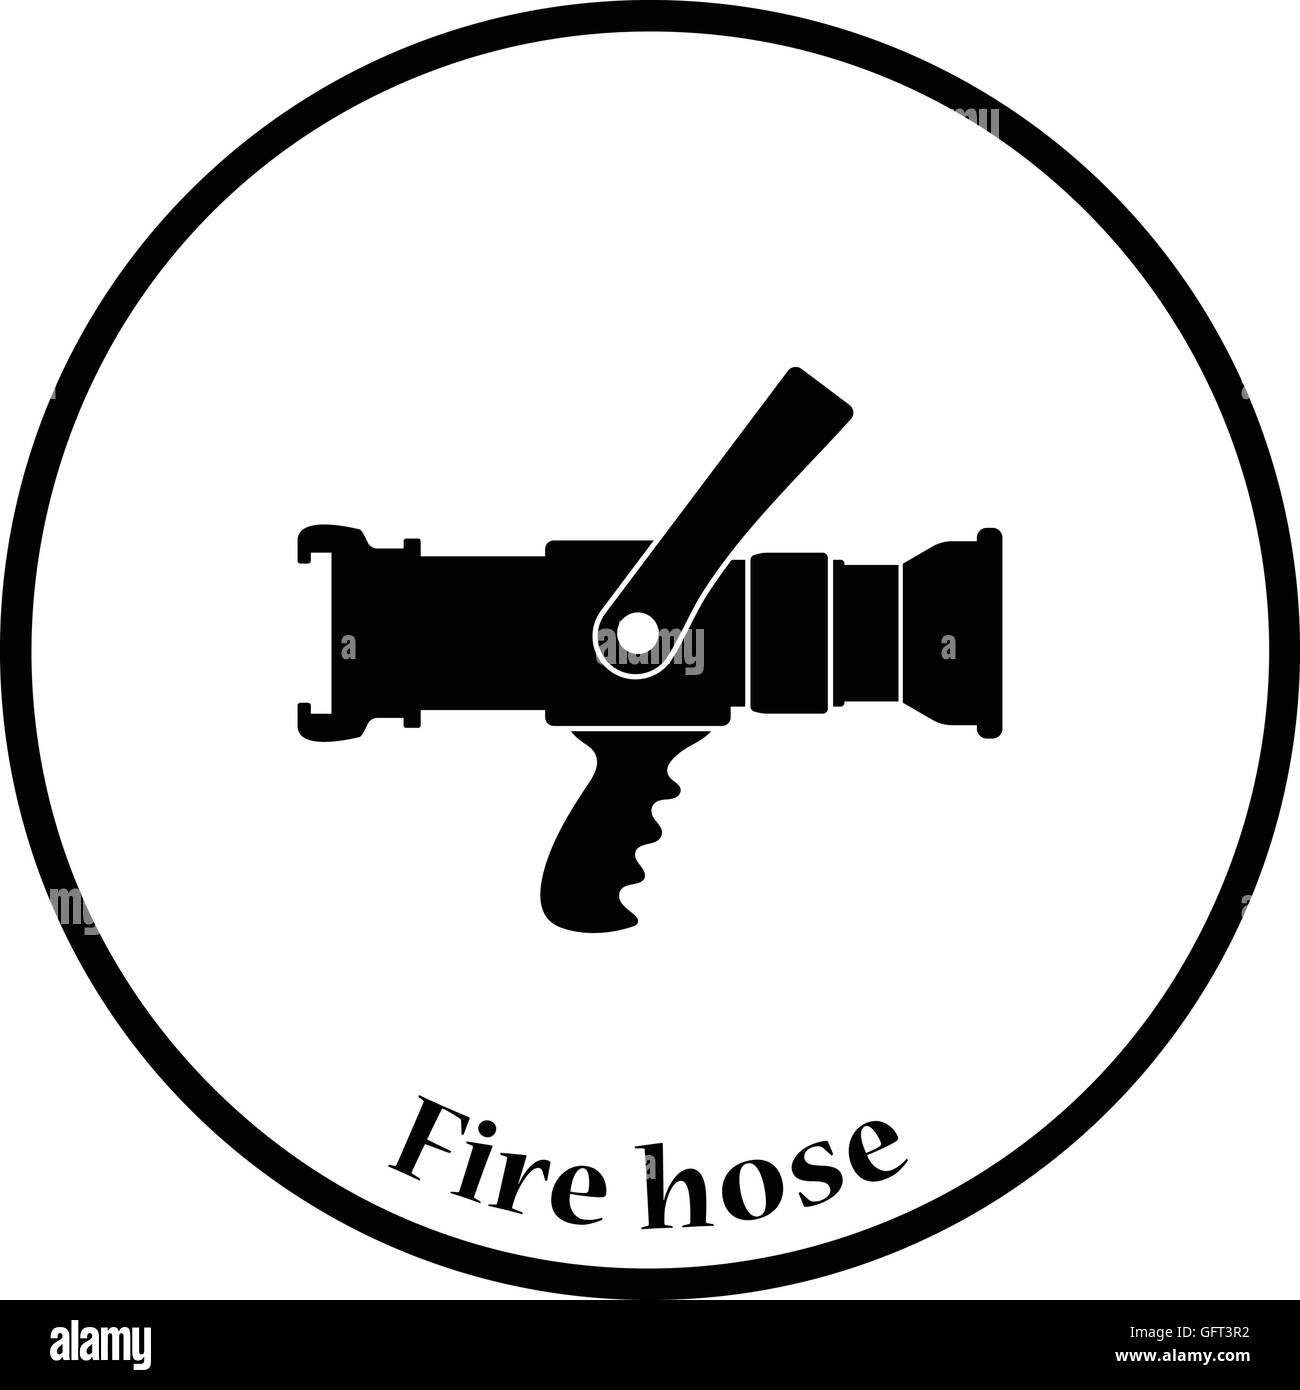 Fire hose icon. Thin circle design. Vector illustration. Stock Vector